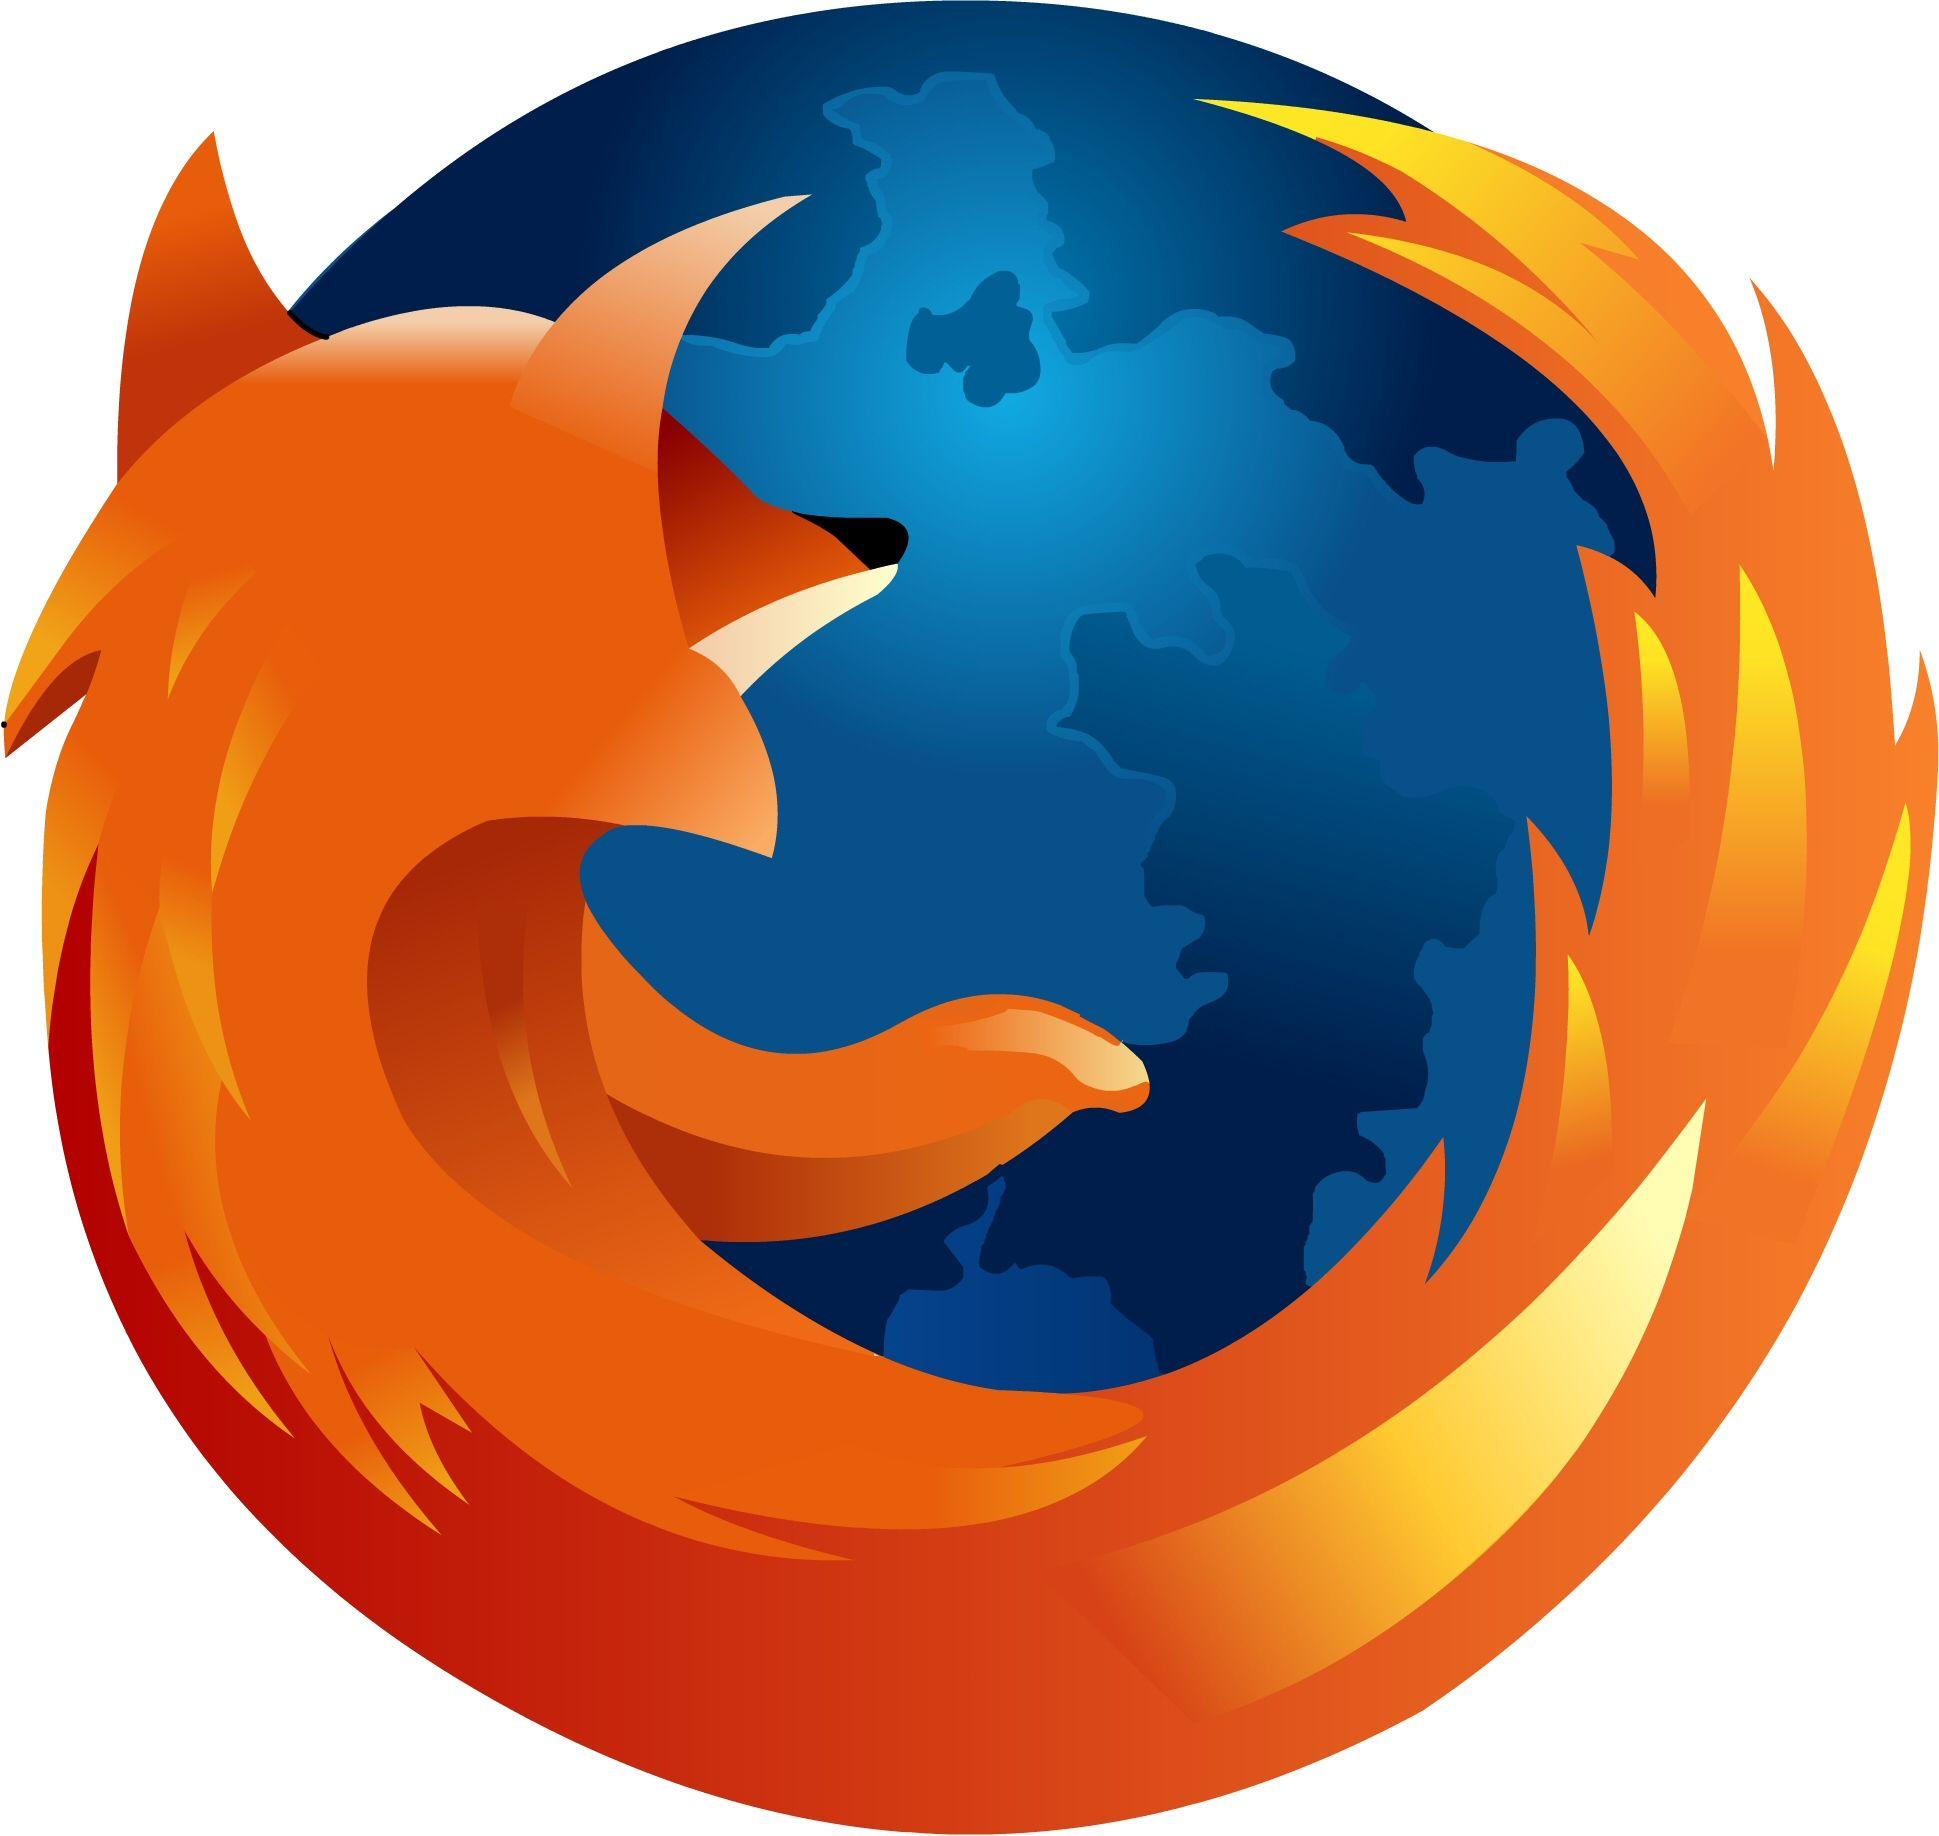 Firefox OS Logo - Firefox OS